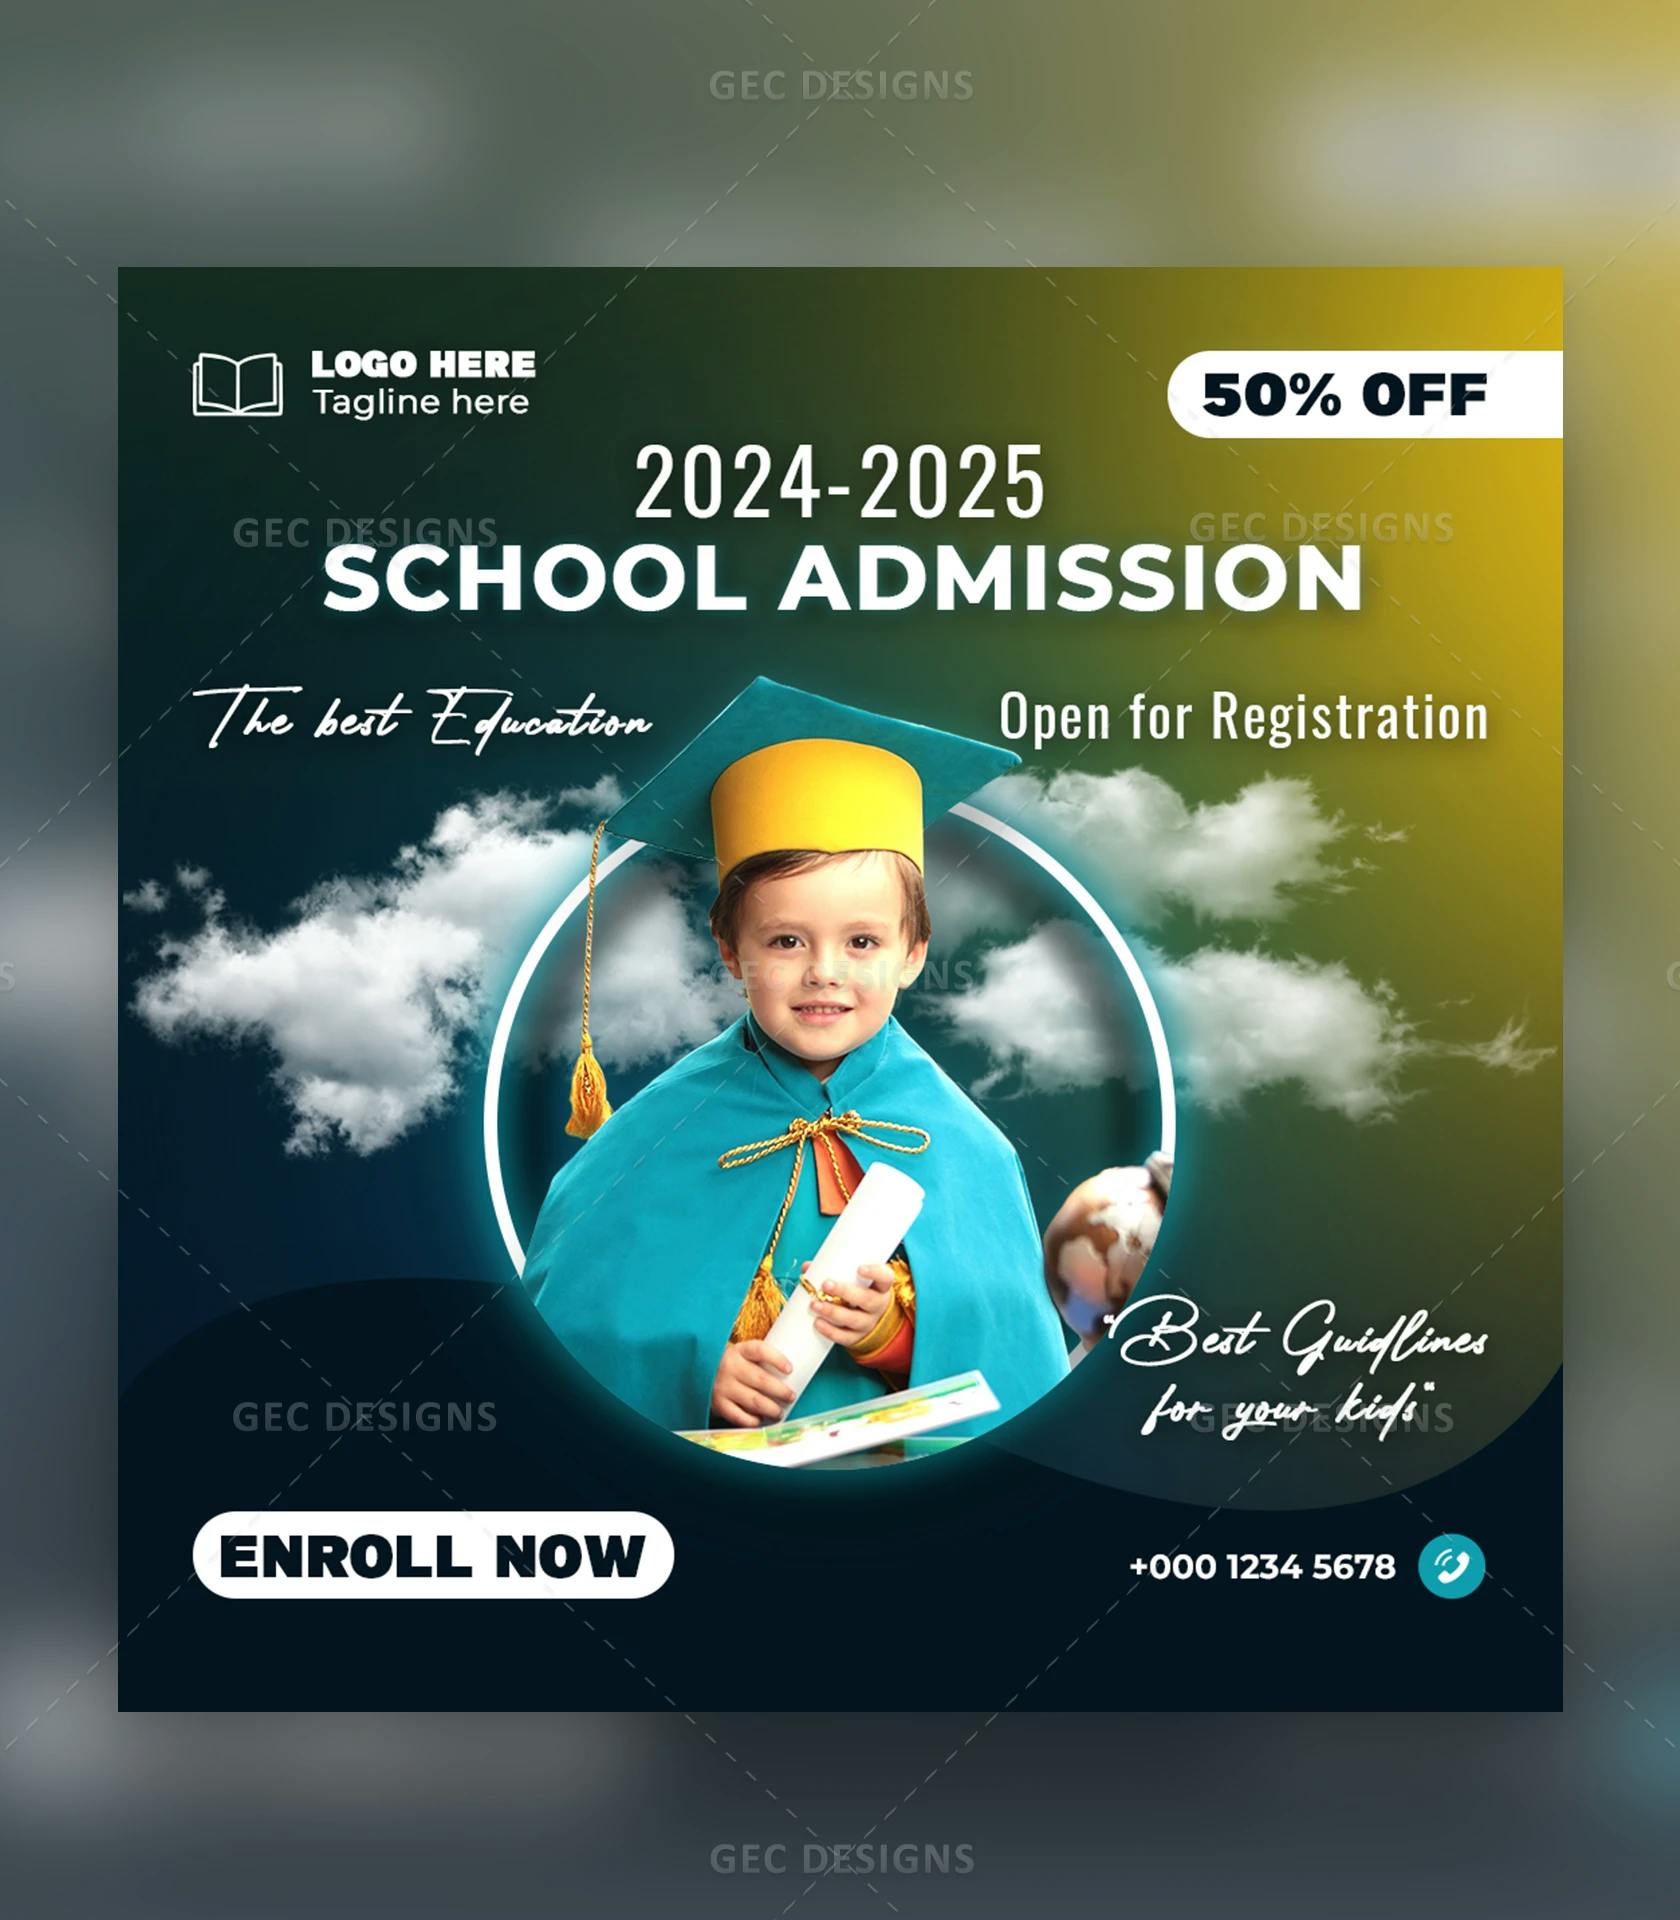 School admission advertisement Instagram poster design